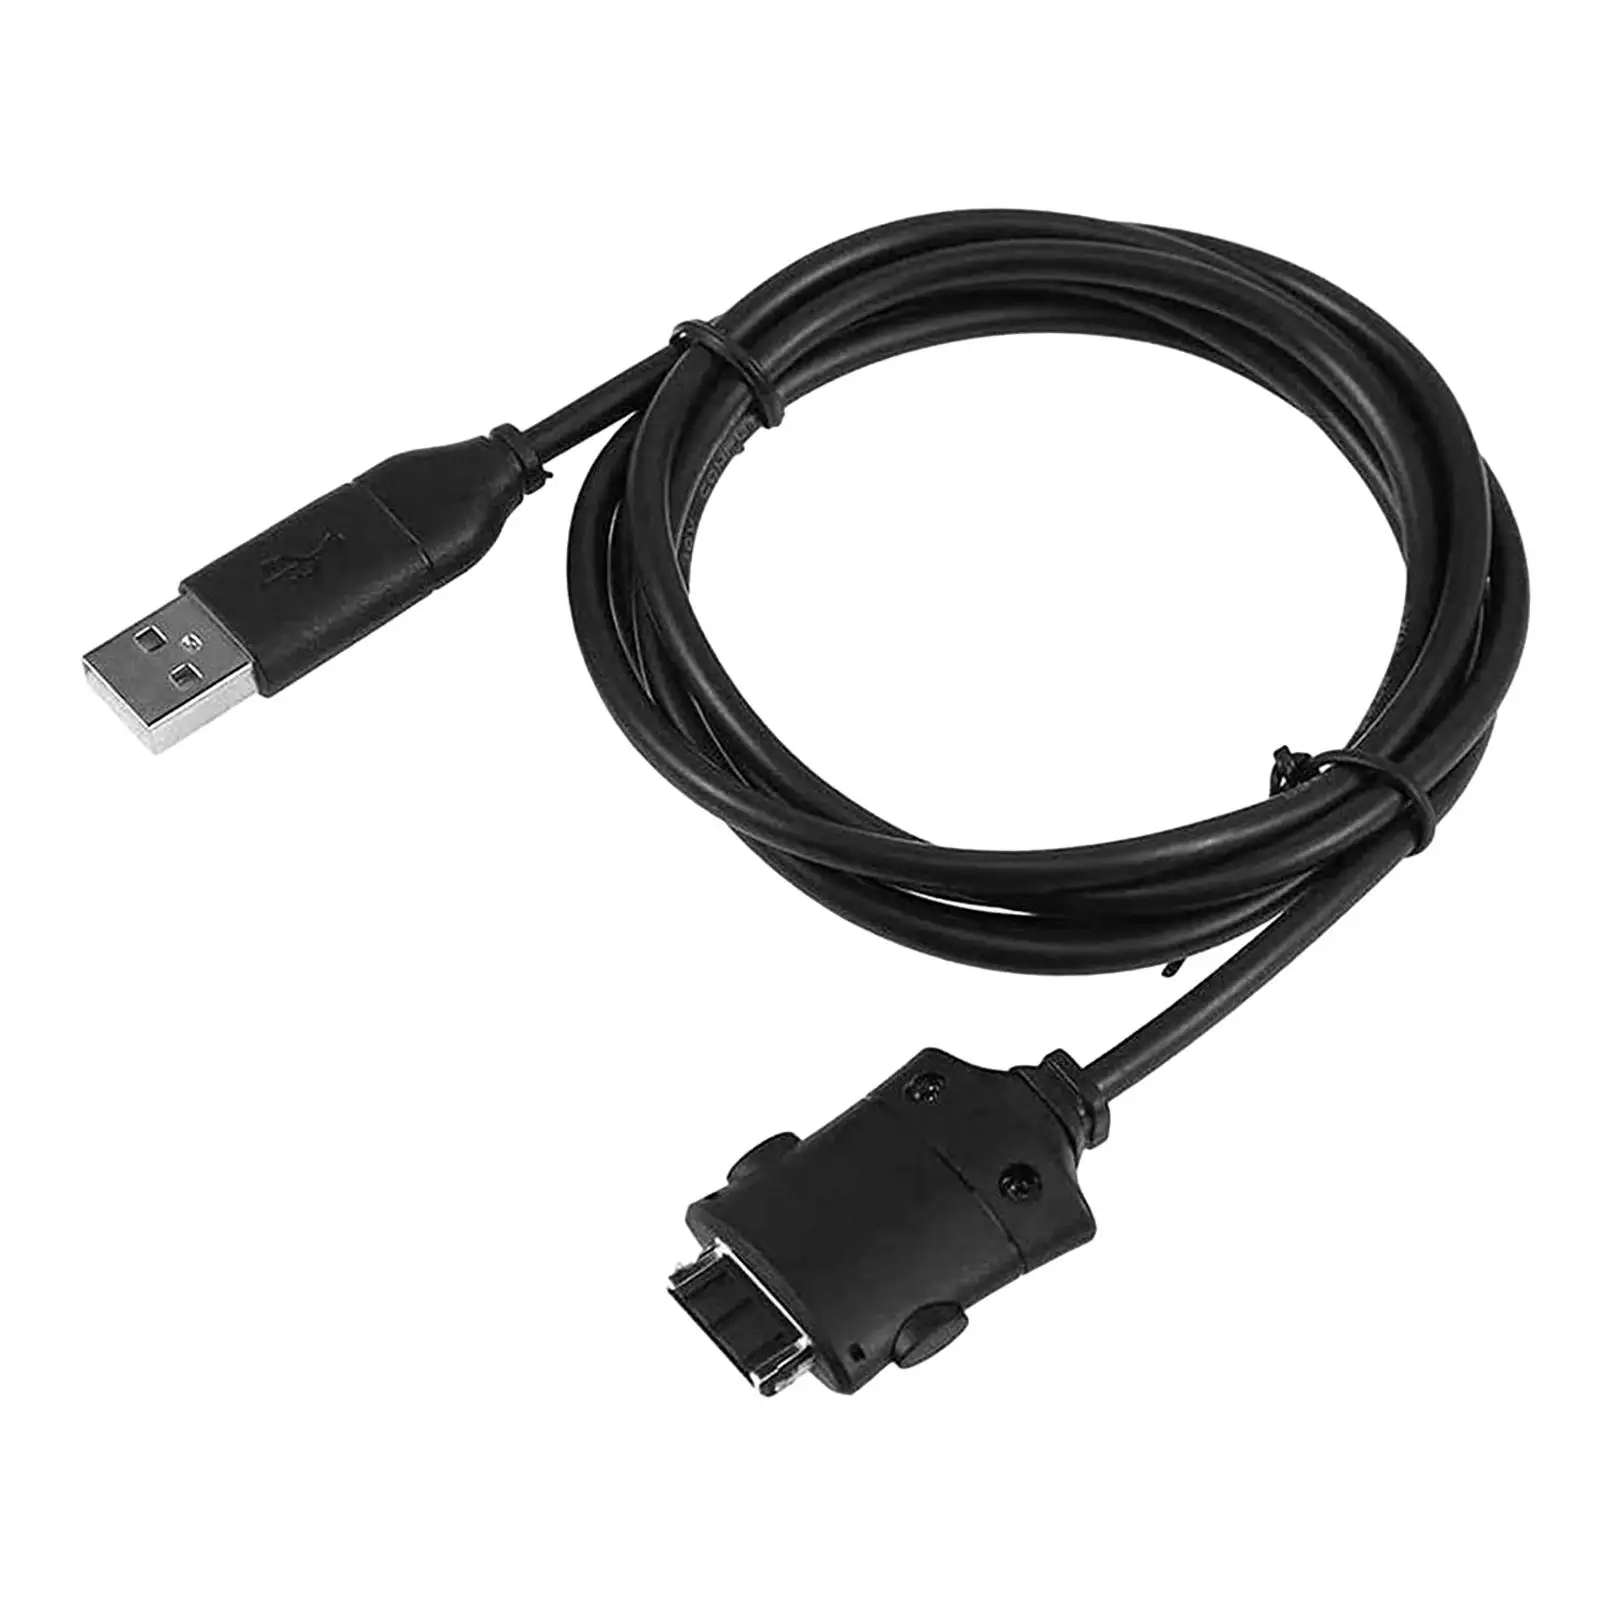 Suc-c2 USB Data Charging Cable Cord Professional Spare Parts Accessory Durable 1.5M Black for Digital Camera L830 U-ca5 Nv5 Nv20